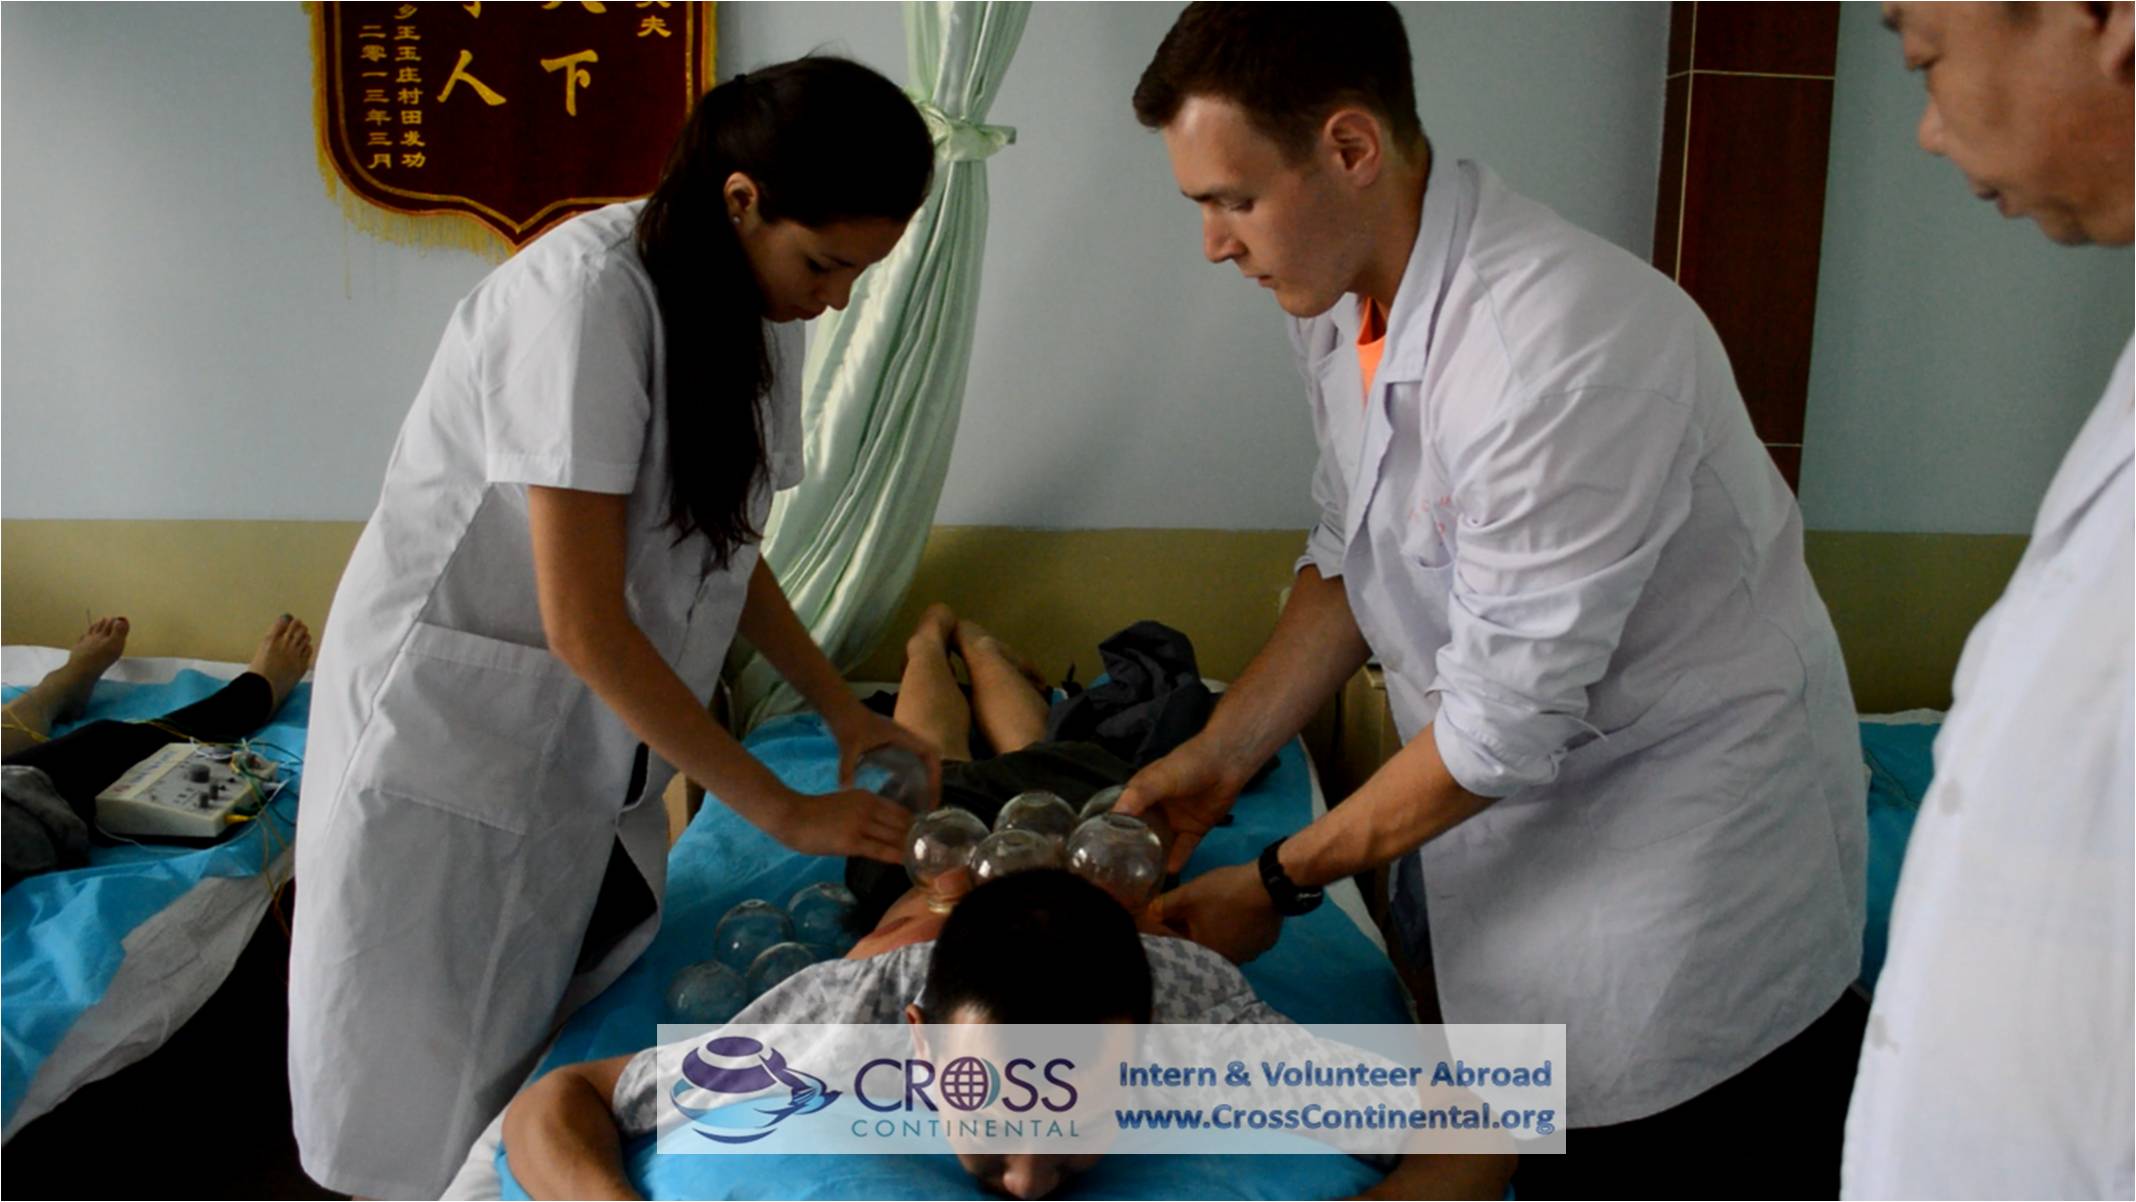 Medical Internships Abroad and Healthcare Volunteer Abroad Programs